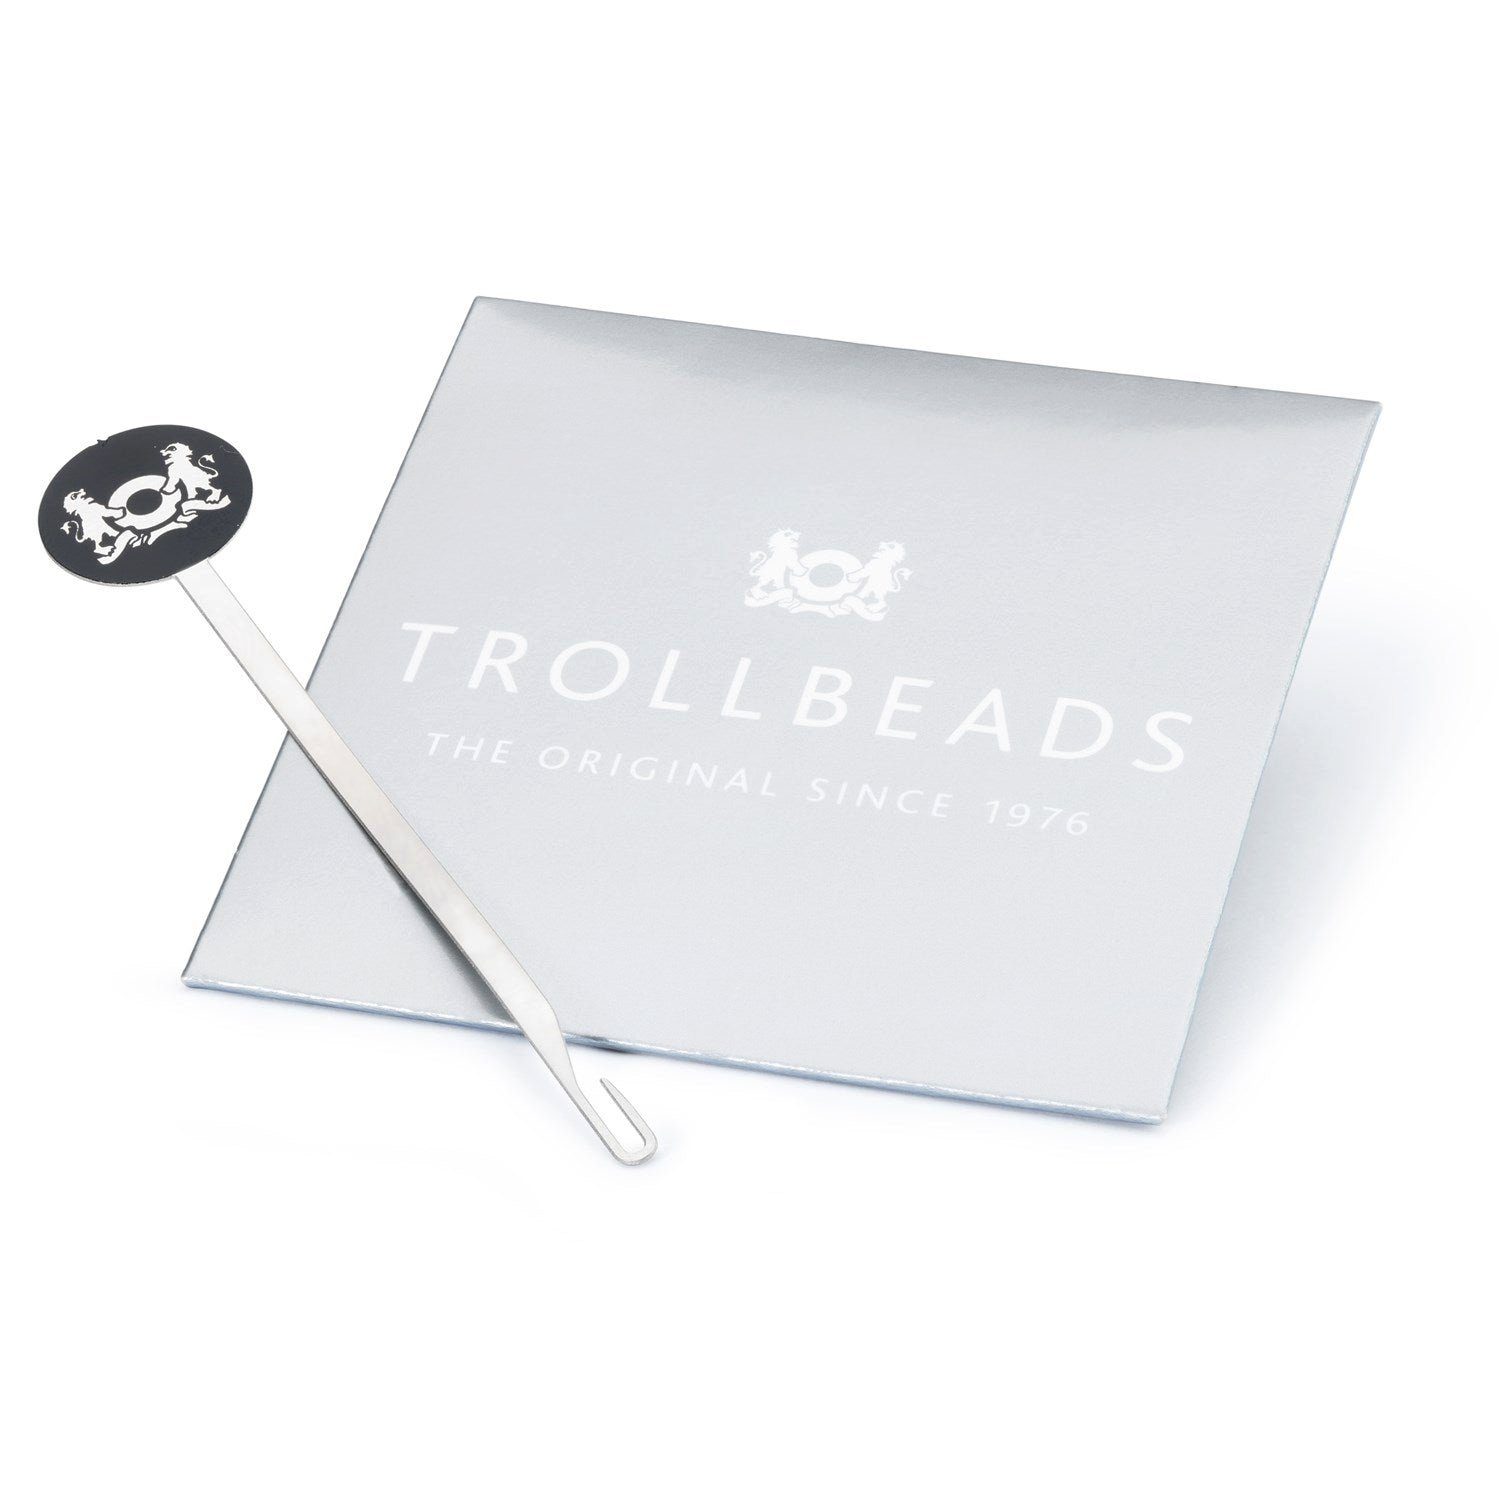 Trollbeads Bead Spacer Tracker Hilfe, - Kettengestaltung TNOBX-00008